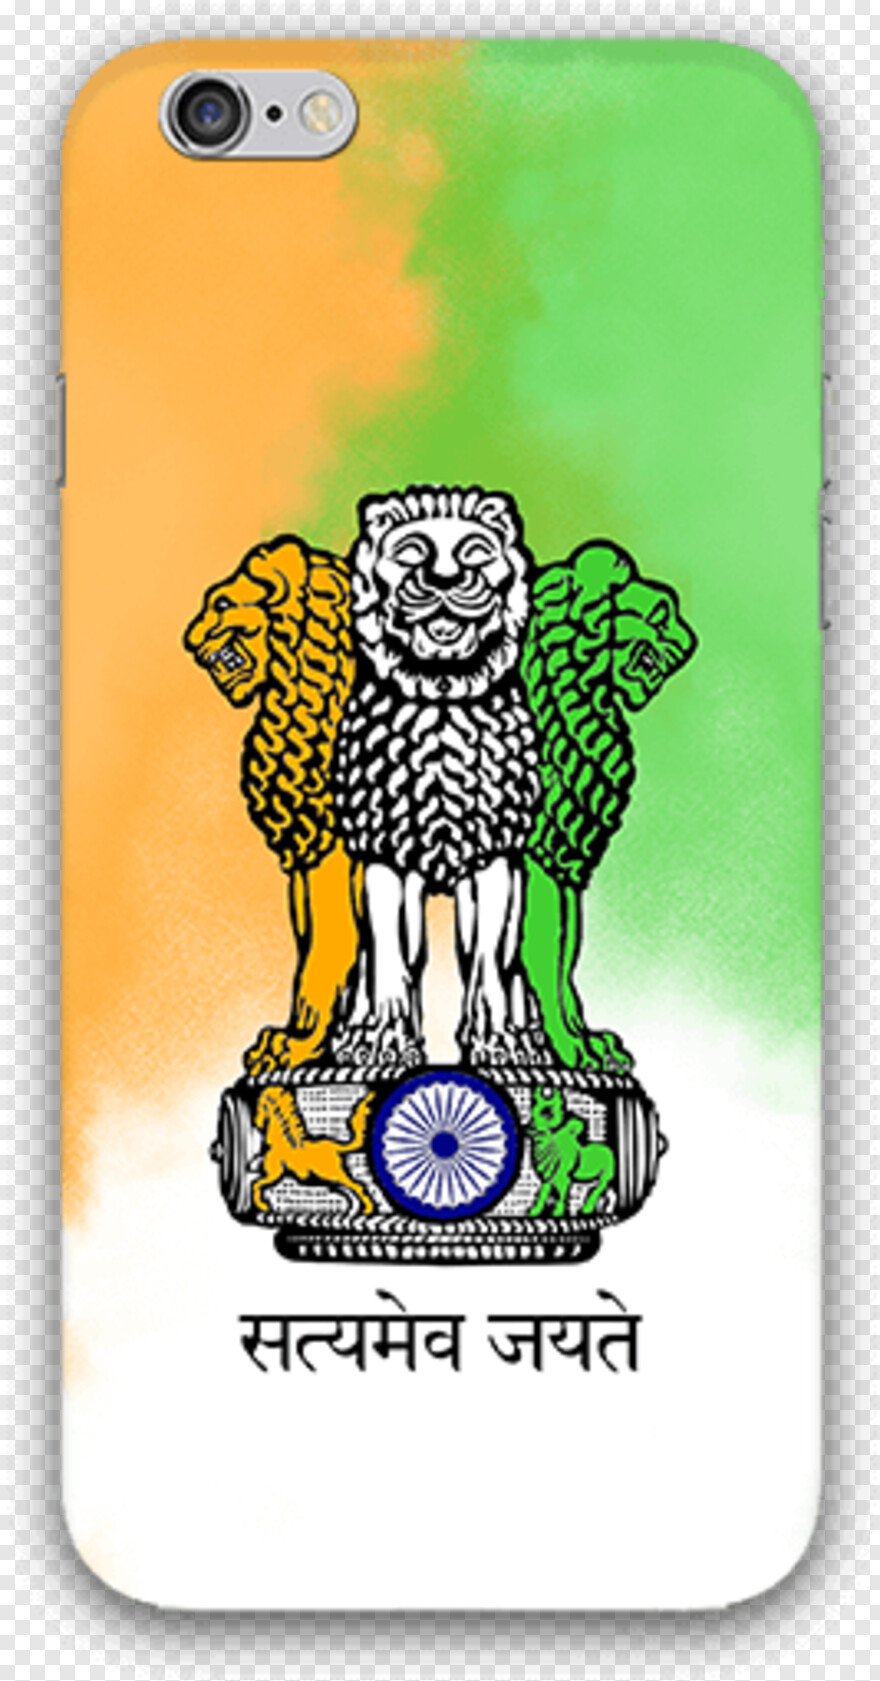 national-emblem-of-india # 432930